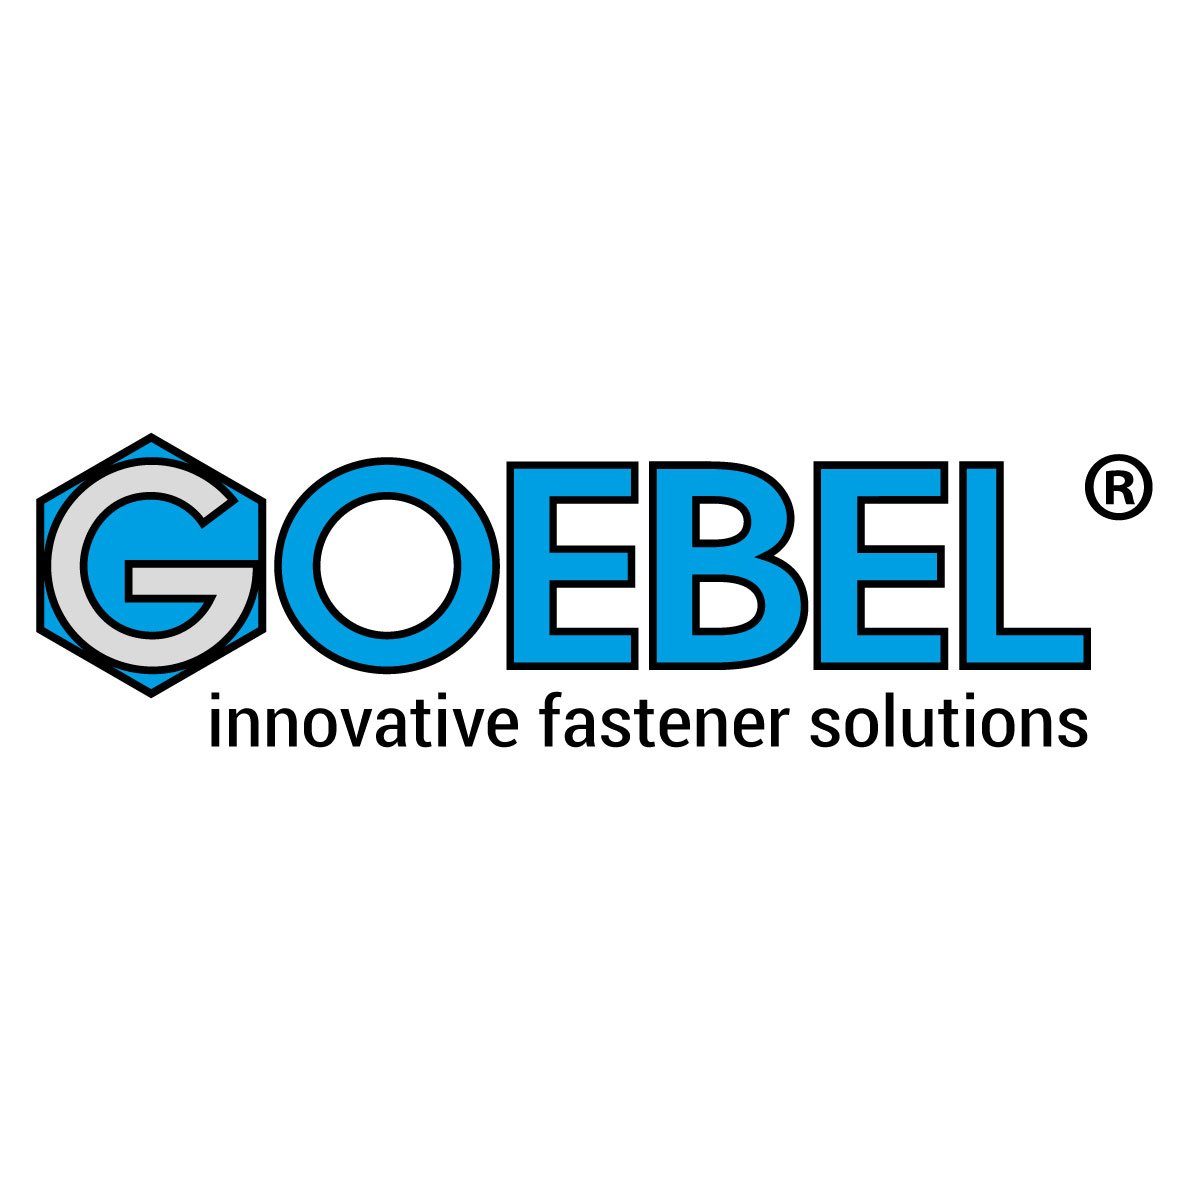 GOEBEL GmbH Blindniete 7080148060, Popniete), STANDARD Flachkopf 4,8 Flachkopf Stahl Niete x / ISO15979, Stahl 6,0 500 St., - - (500x - mm